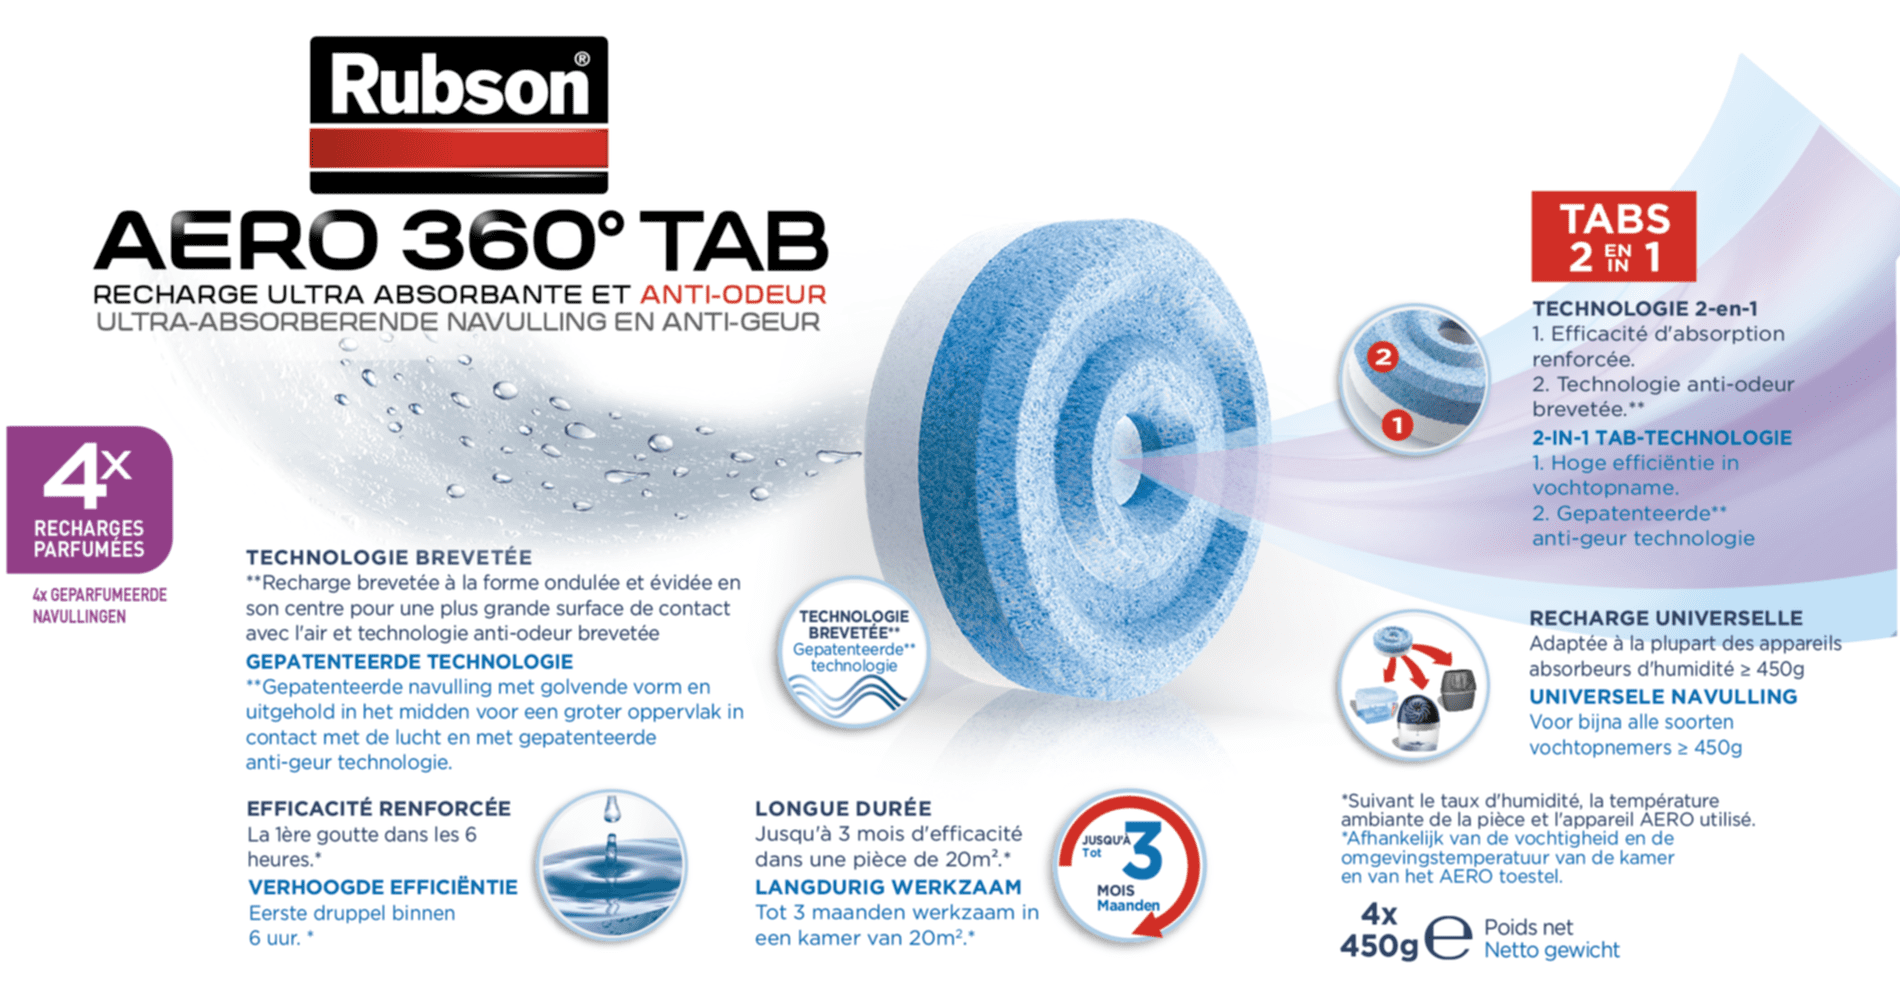 Recharge absorbeur d'humidité Aero 360° lavande - RUBSON - Mr Bricolage